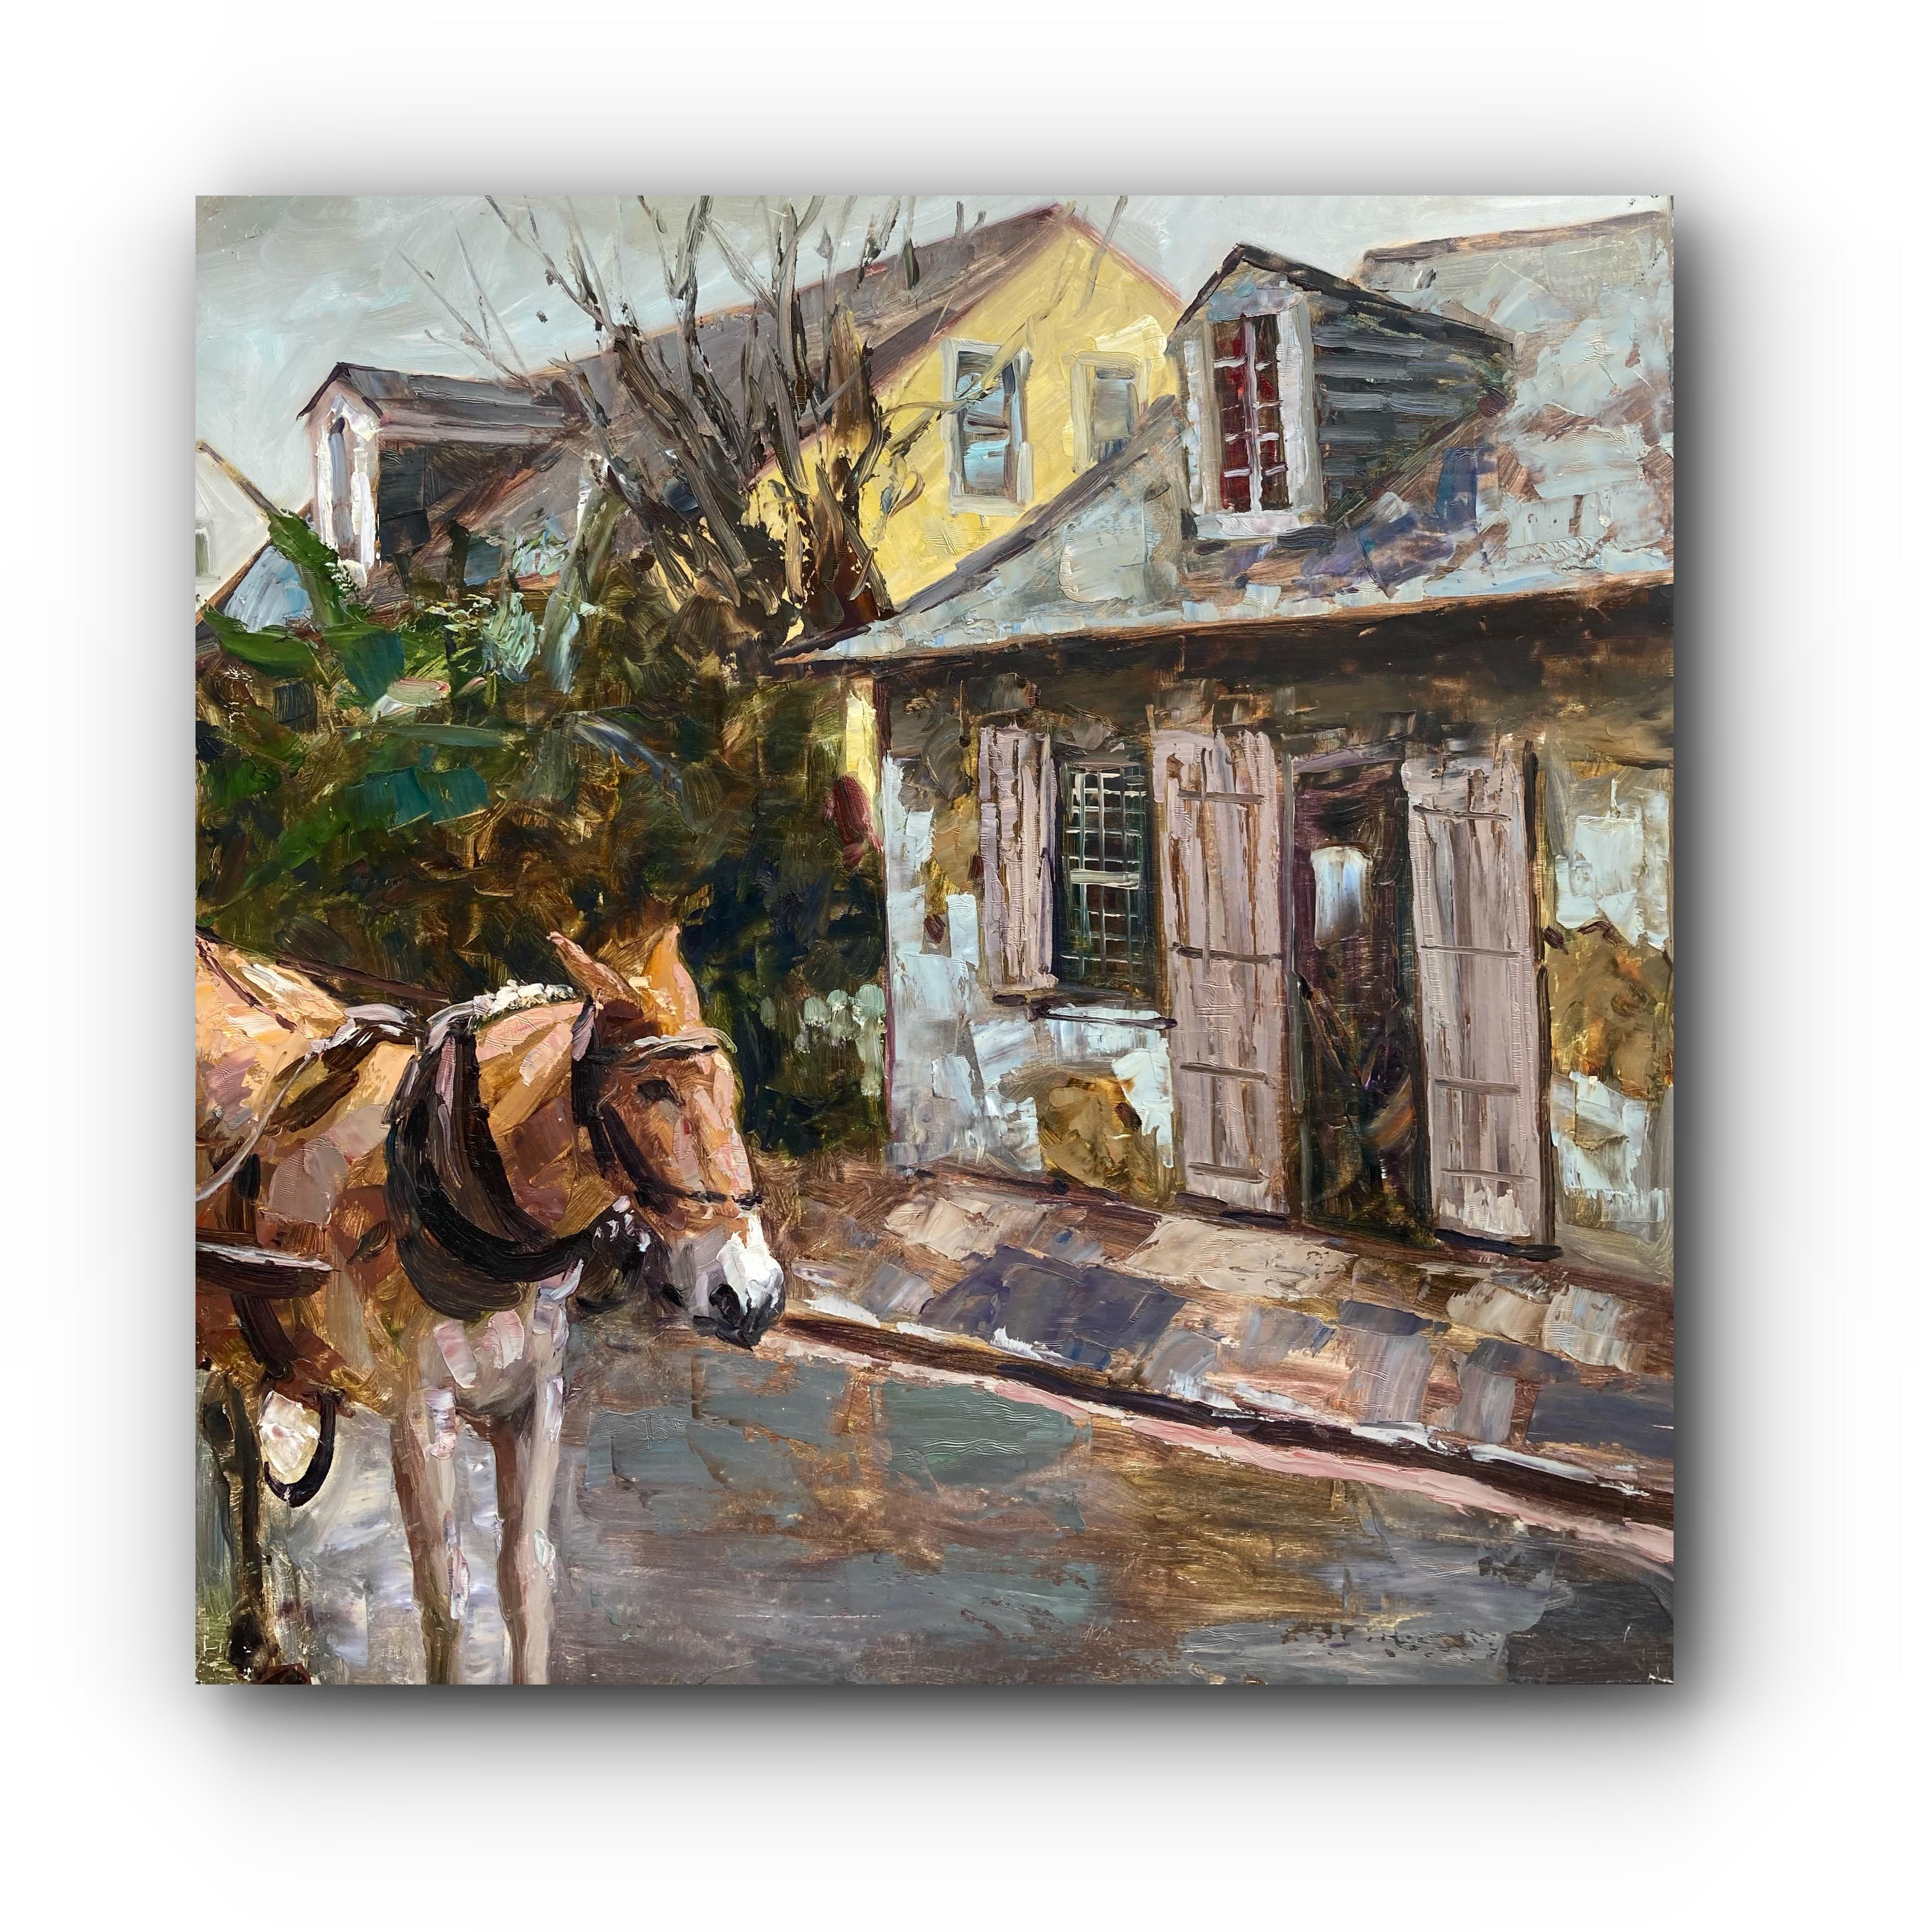 Jean Marc Clouet Animal Painting - Lafitte's Blacksmith Shop, New Orleans (Large)